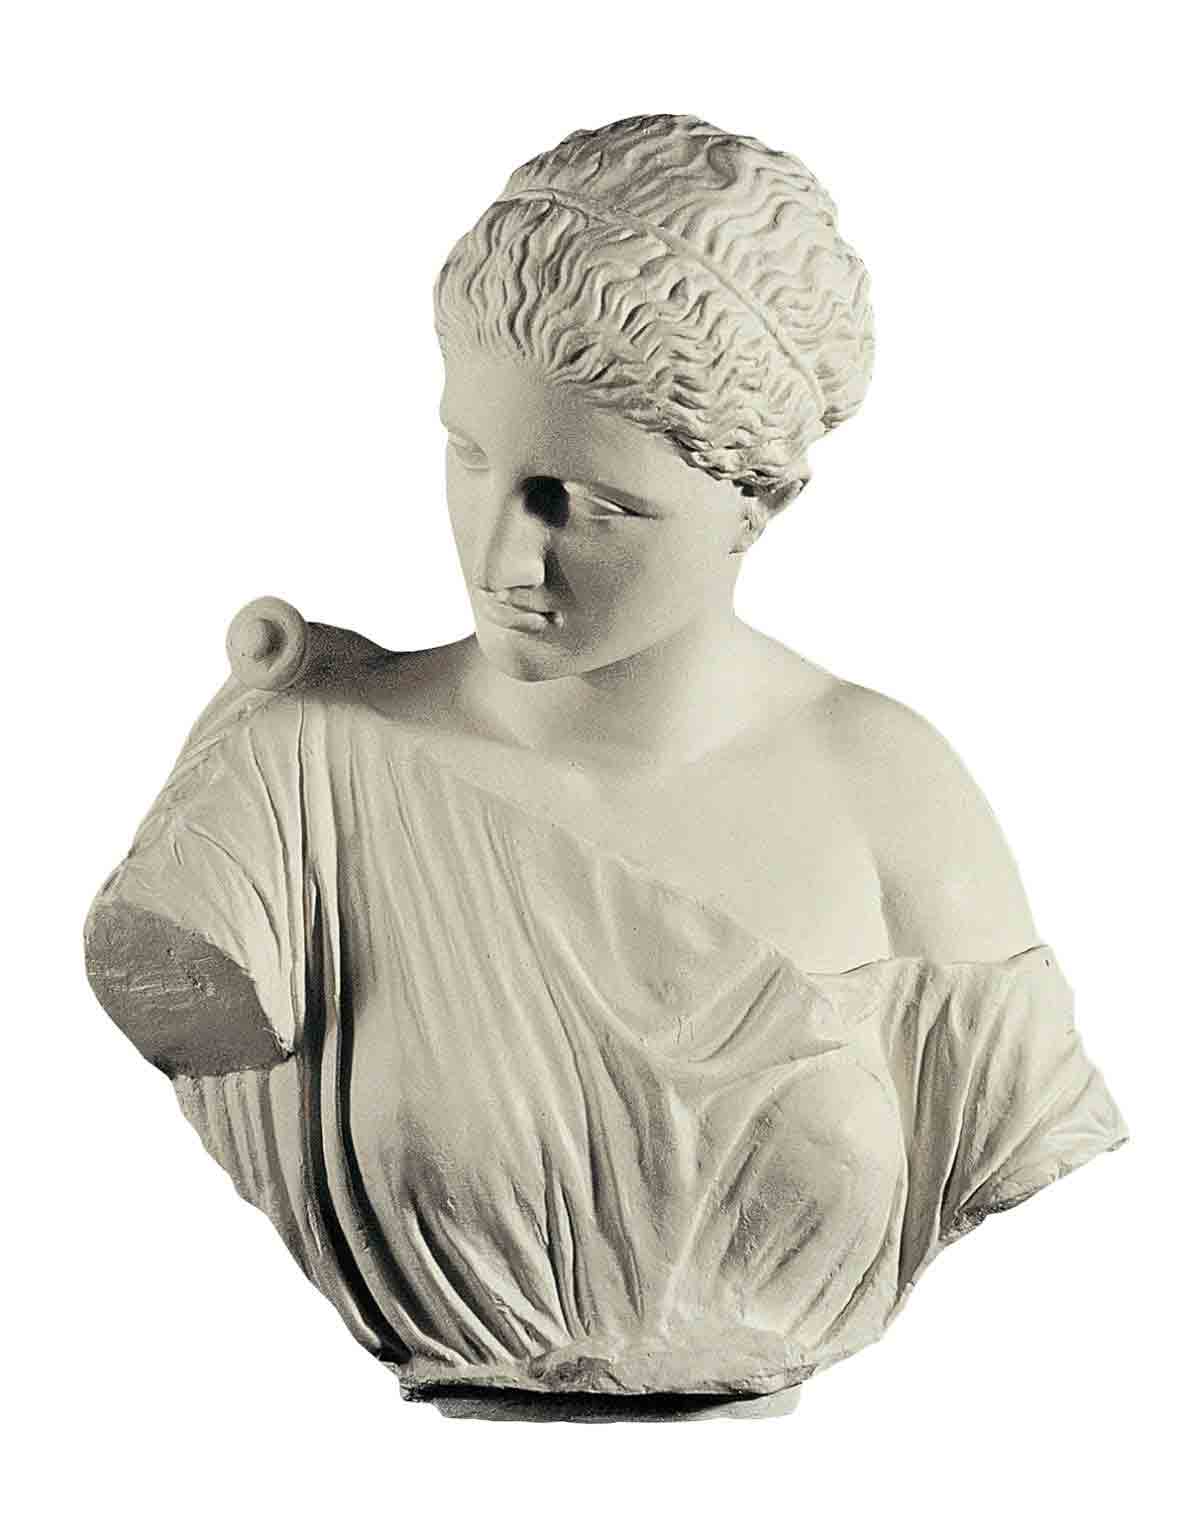 Presunta Artemide di Gabi, particolare del busto (copia in gesso)